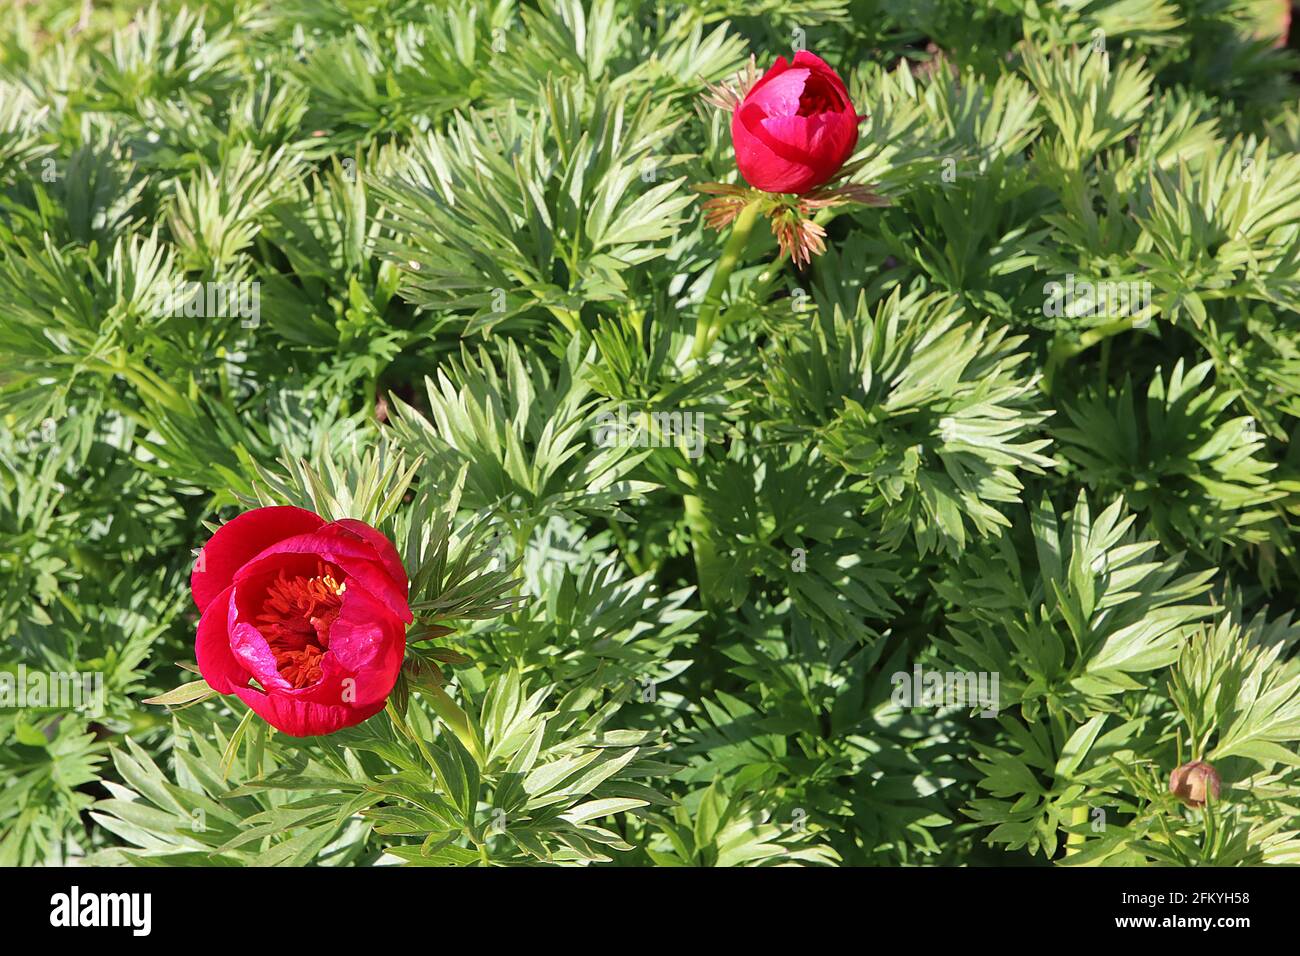 Paeonia anomala subsp ibrida - fiori rossi magenta e foglie verdi divise, maggio, Inghilterra, Regno Unito Foto Stock